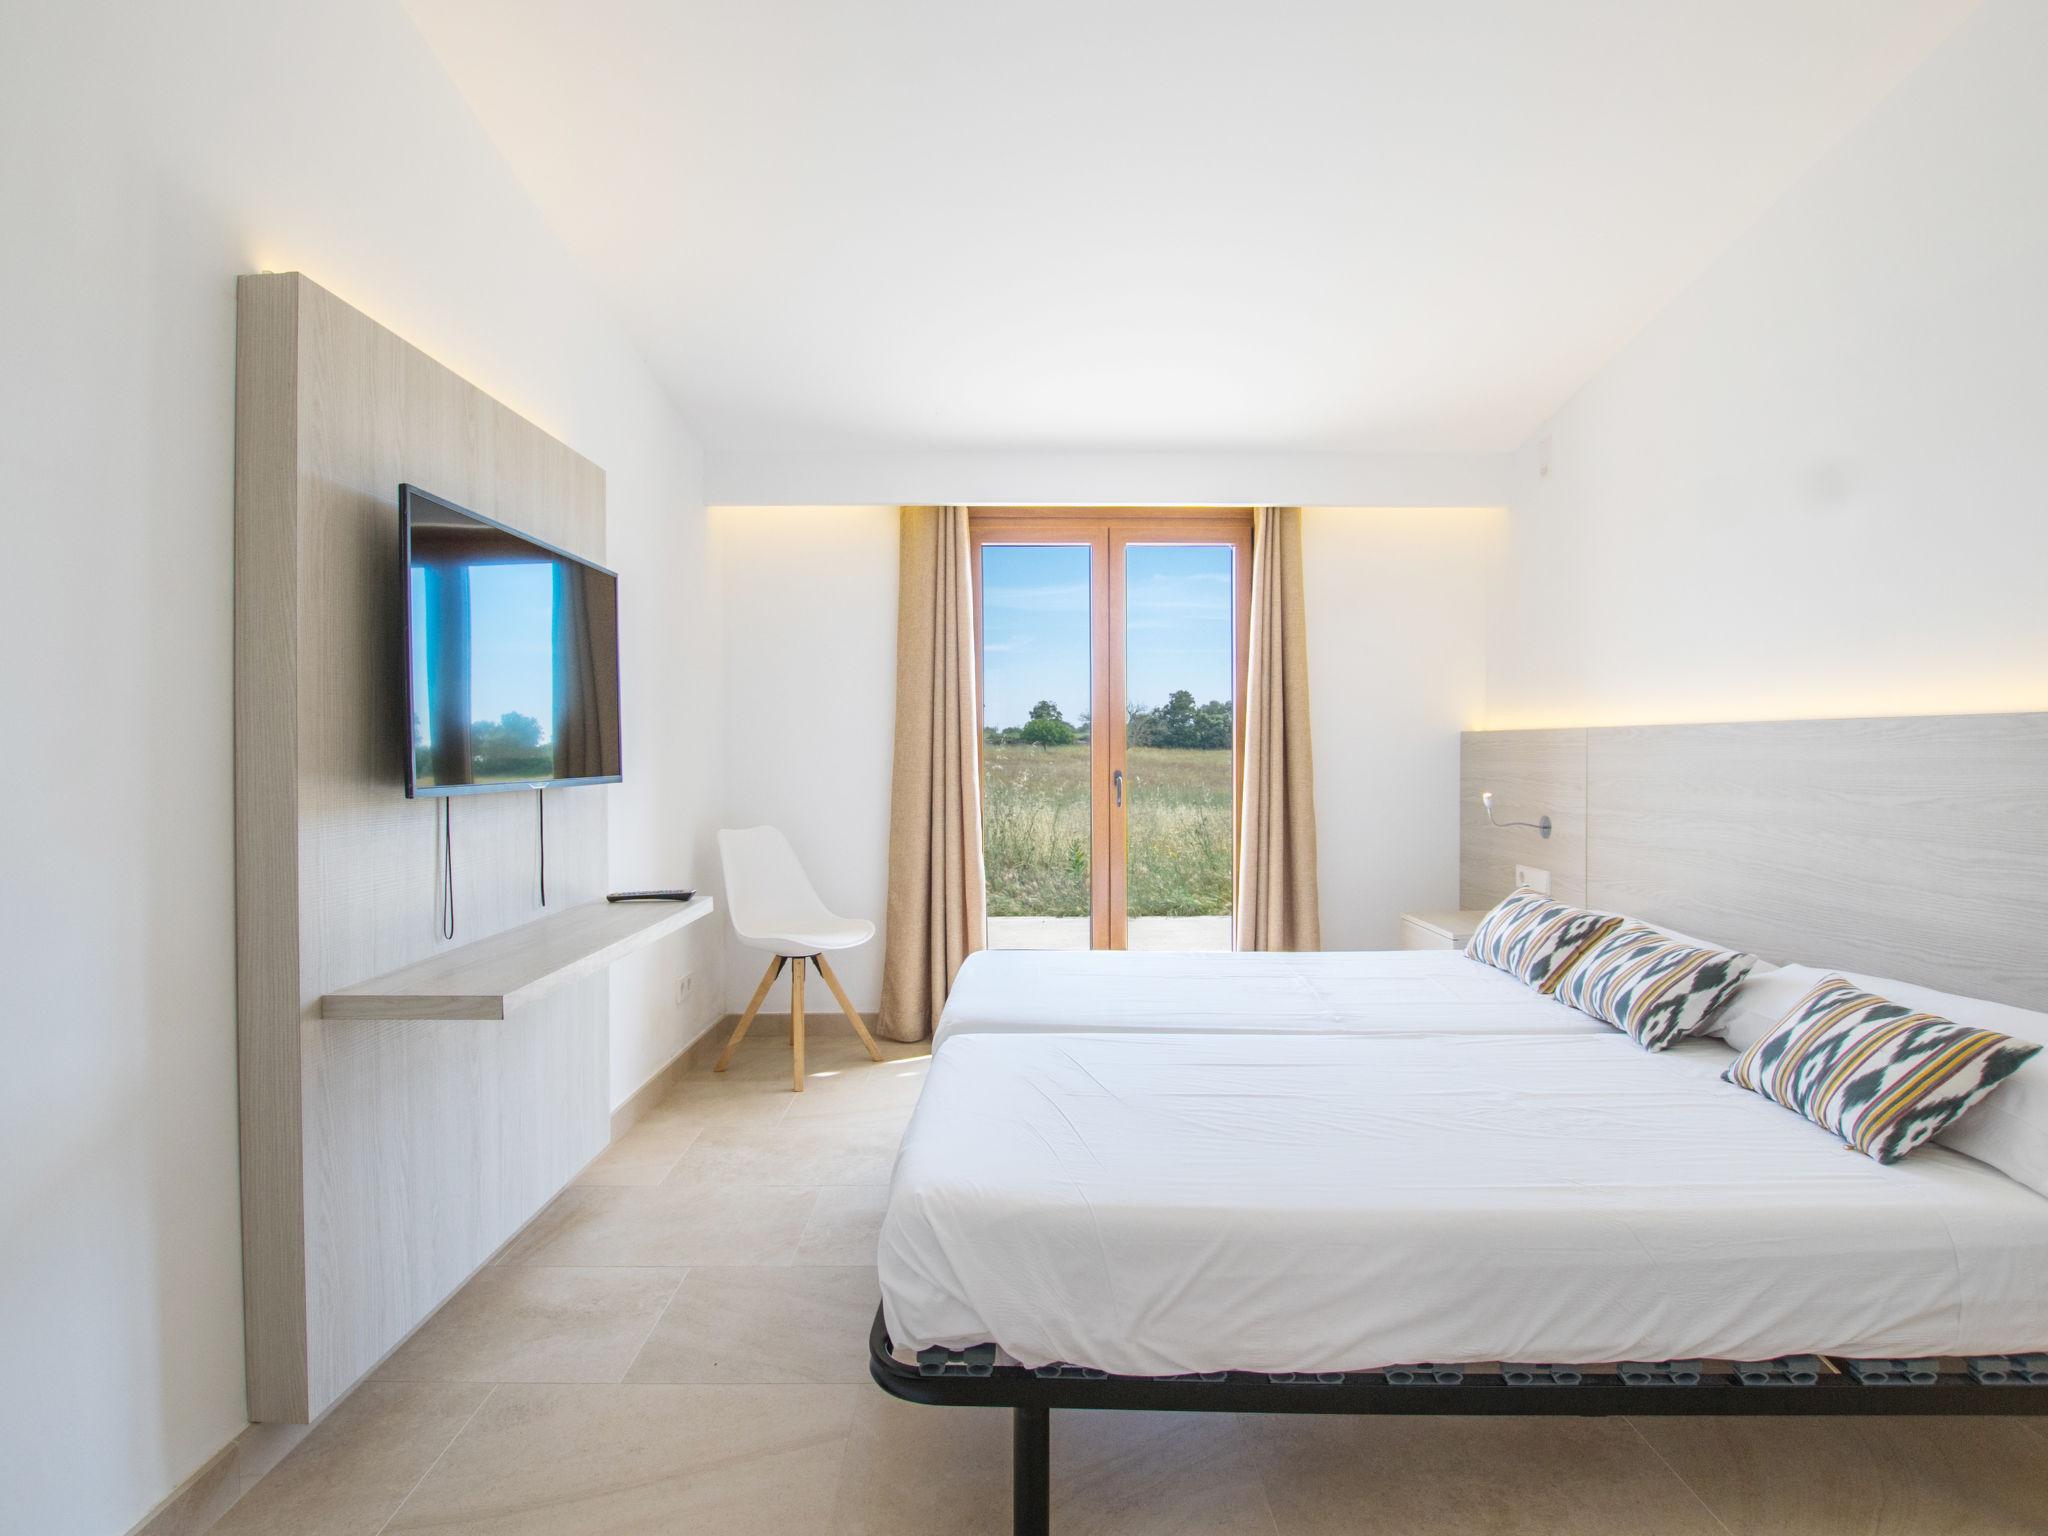 Foto 19 - Casa con 6 camere da letto a Sencelles con piscina privata e giardino